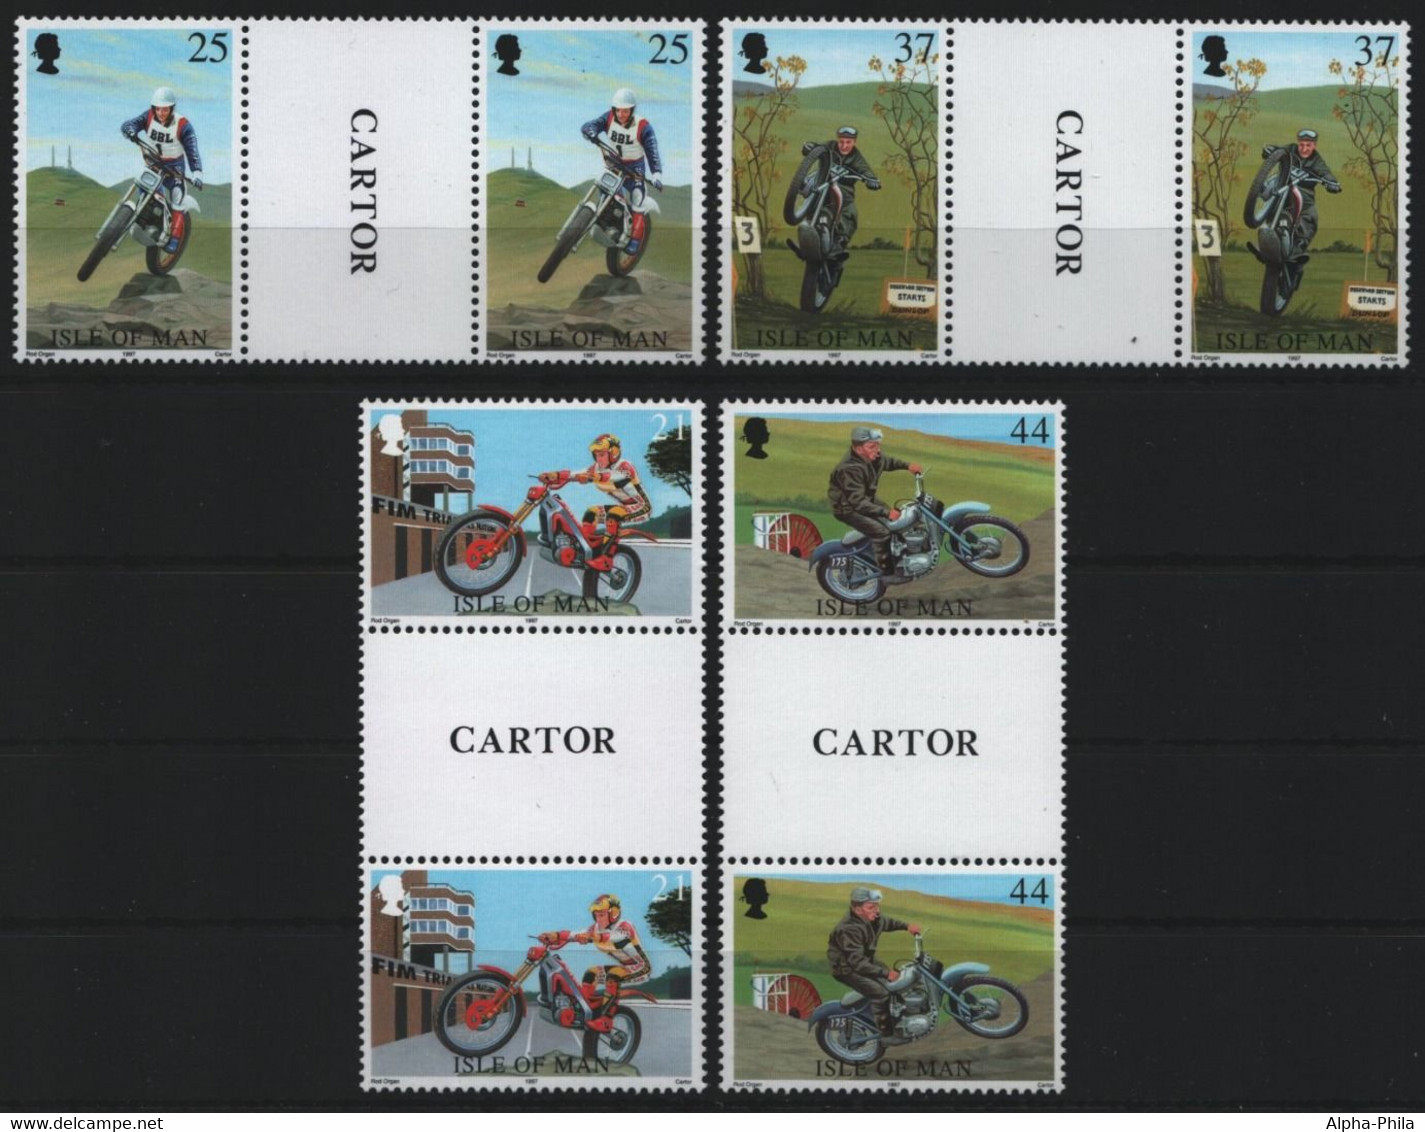 Isle Of Man 1997 - Mi-Nr. 736-739 ** - MNH - Stegpaare - Motorrad / Motor Bikes - Isla De Man